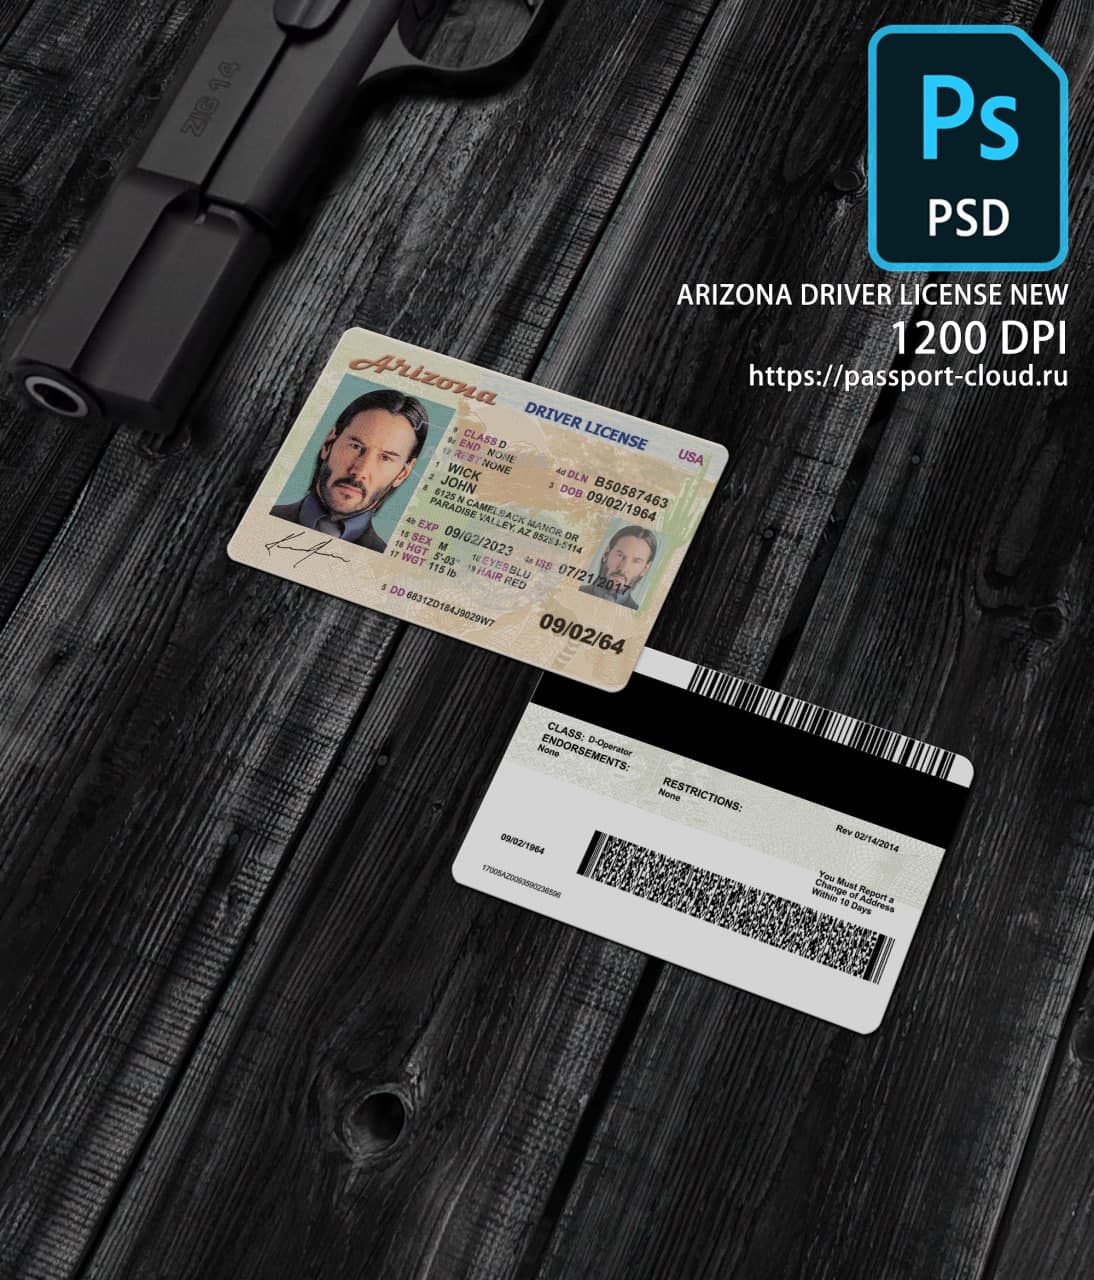 Arizona Driver License NEW1